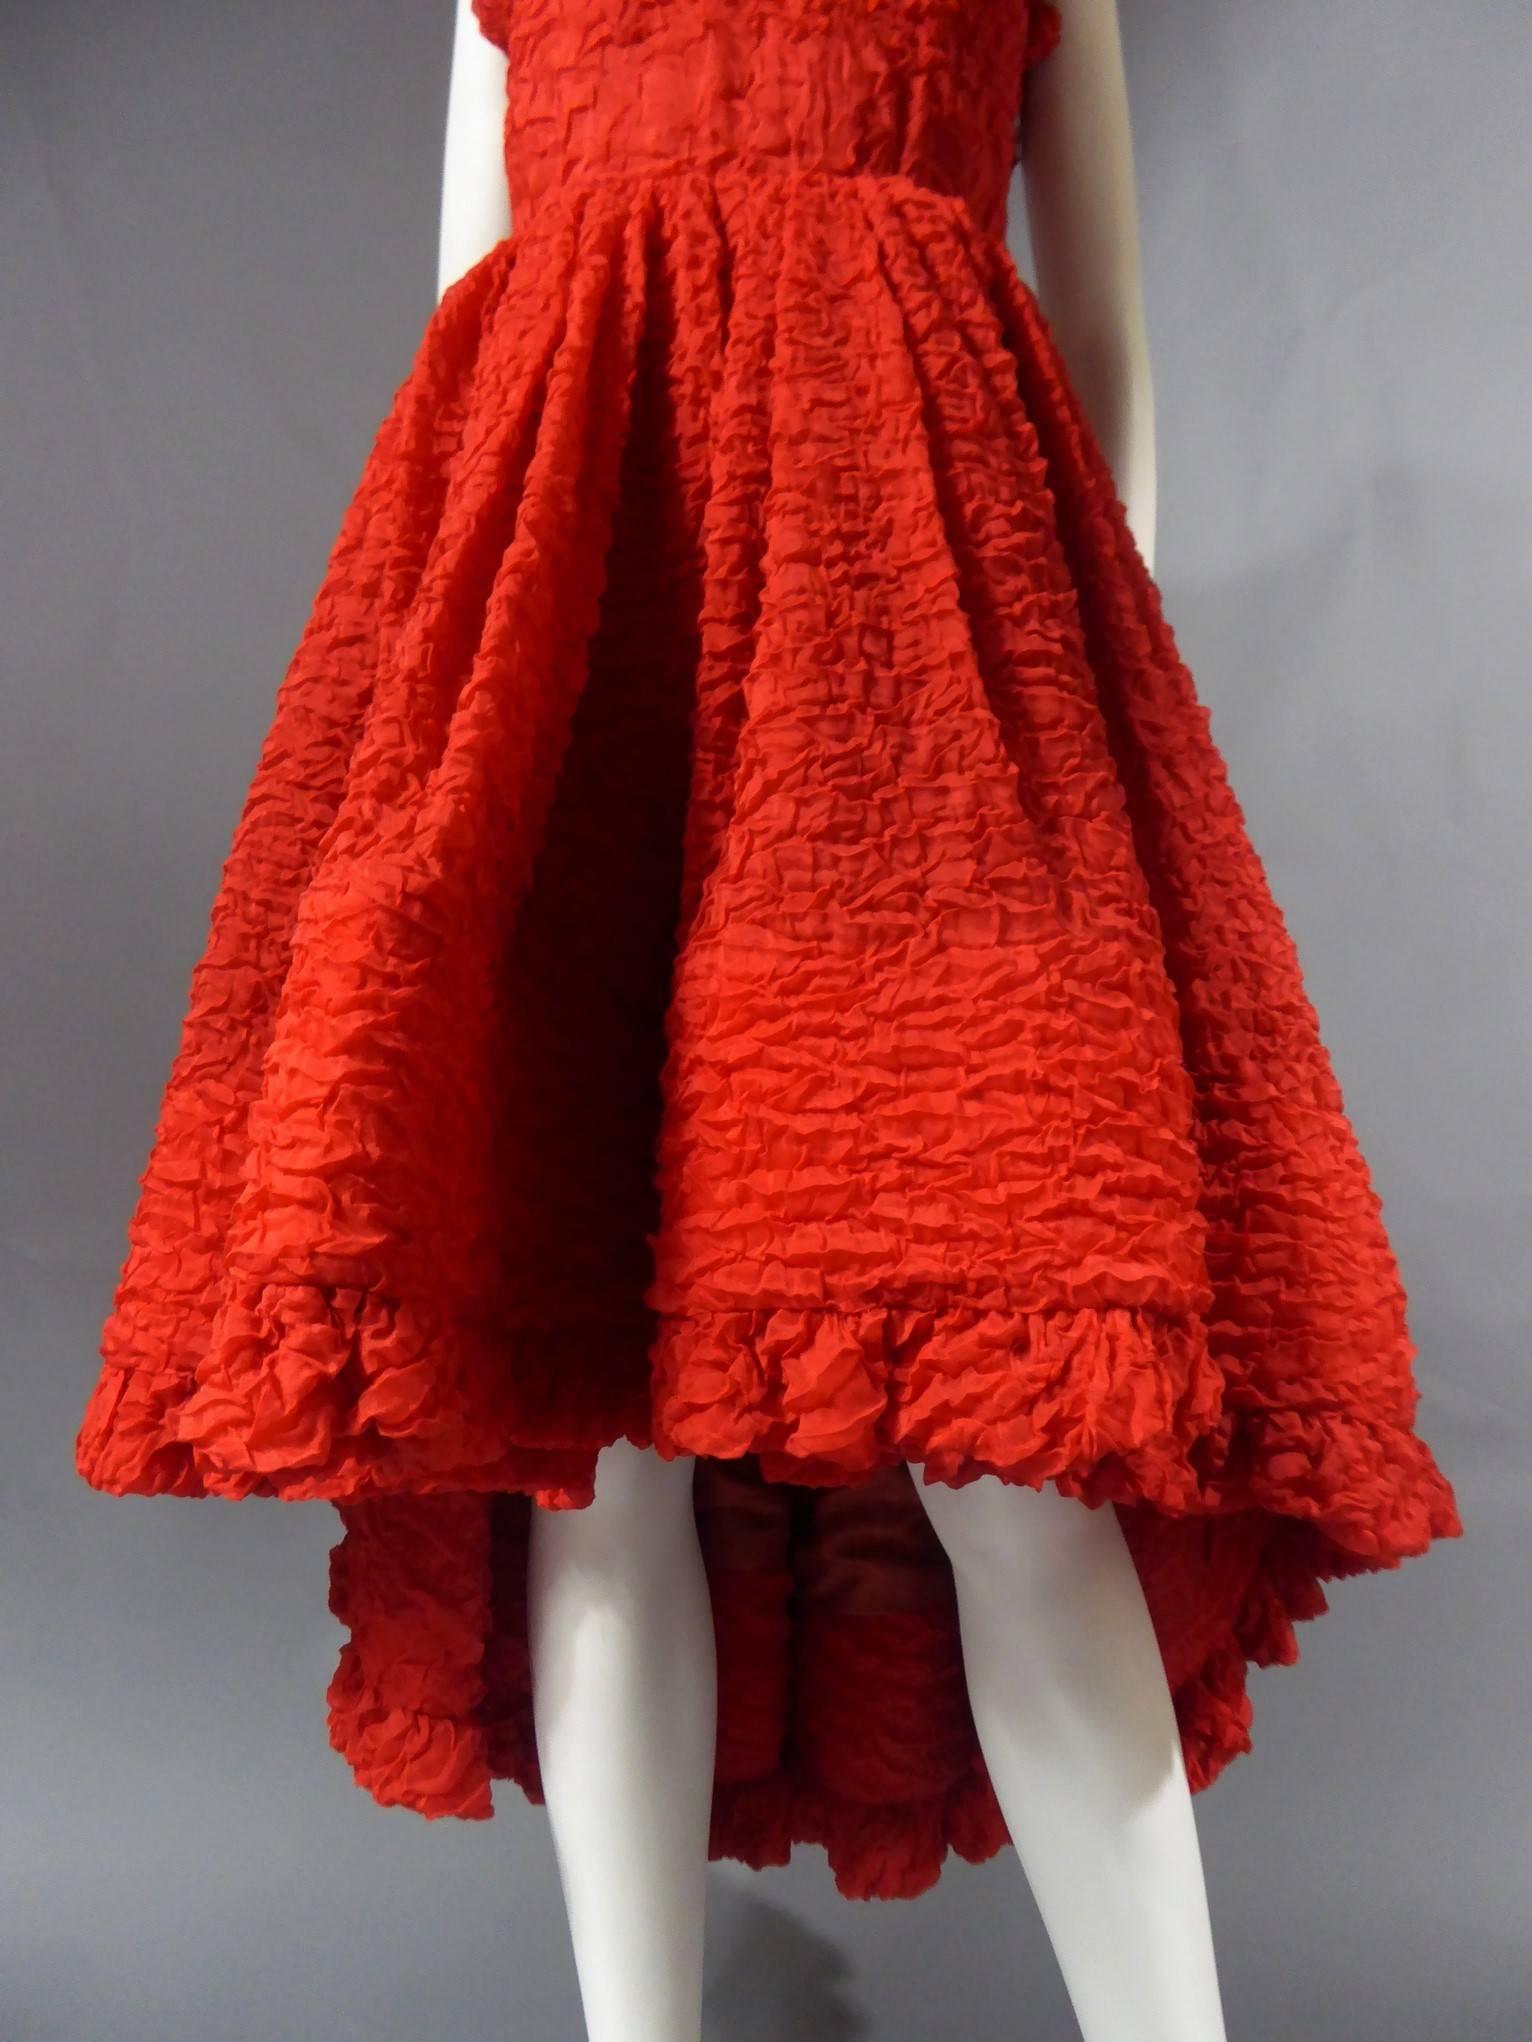 Women's A Pierre Cardin Haute Couture Red Silk strapless Cocktail Dress, Circa 1980